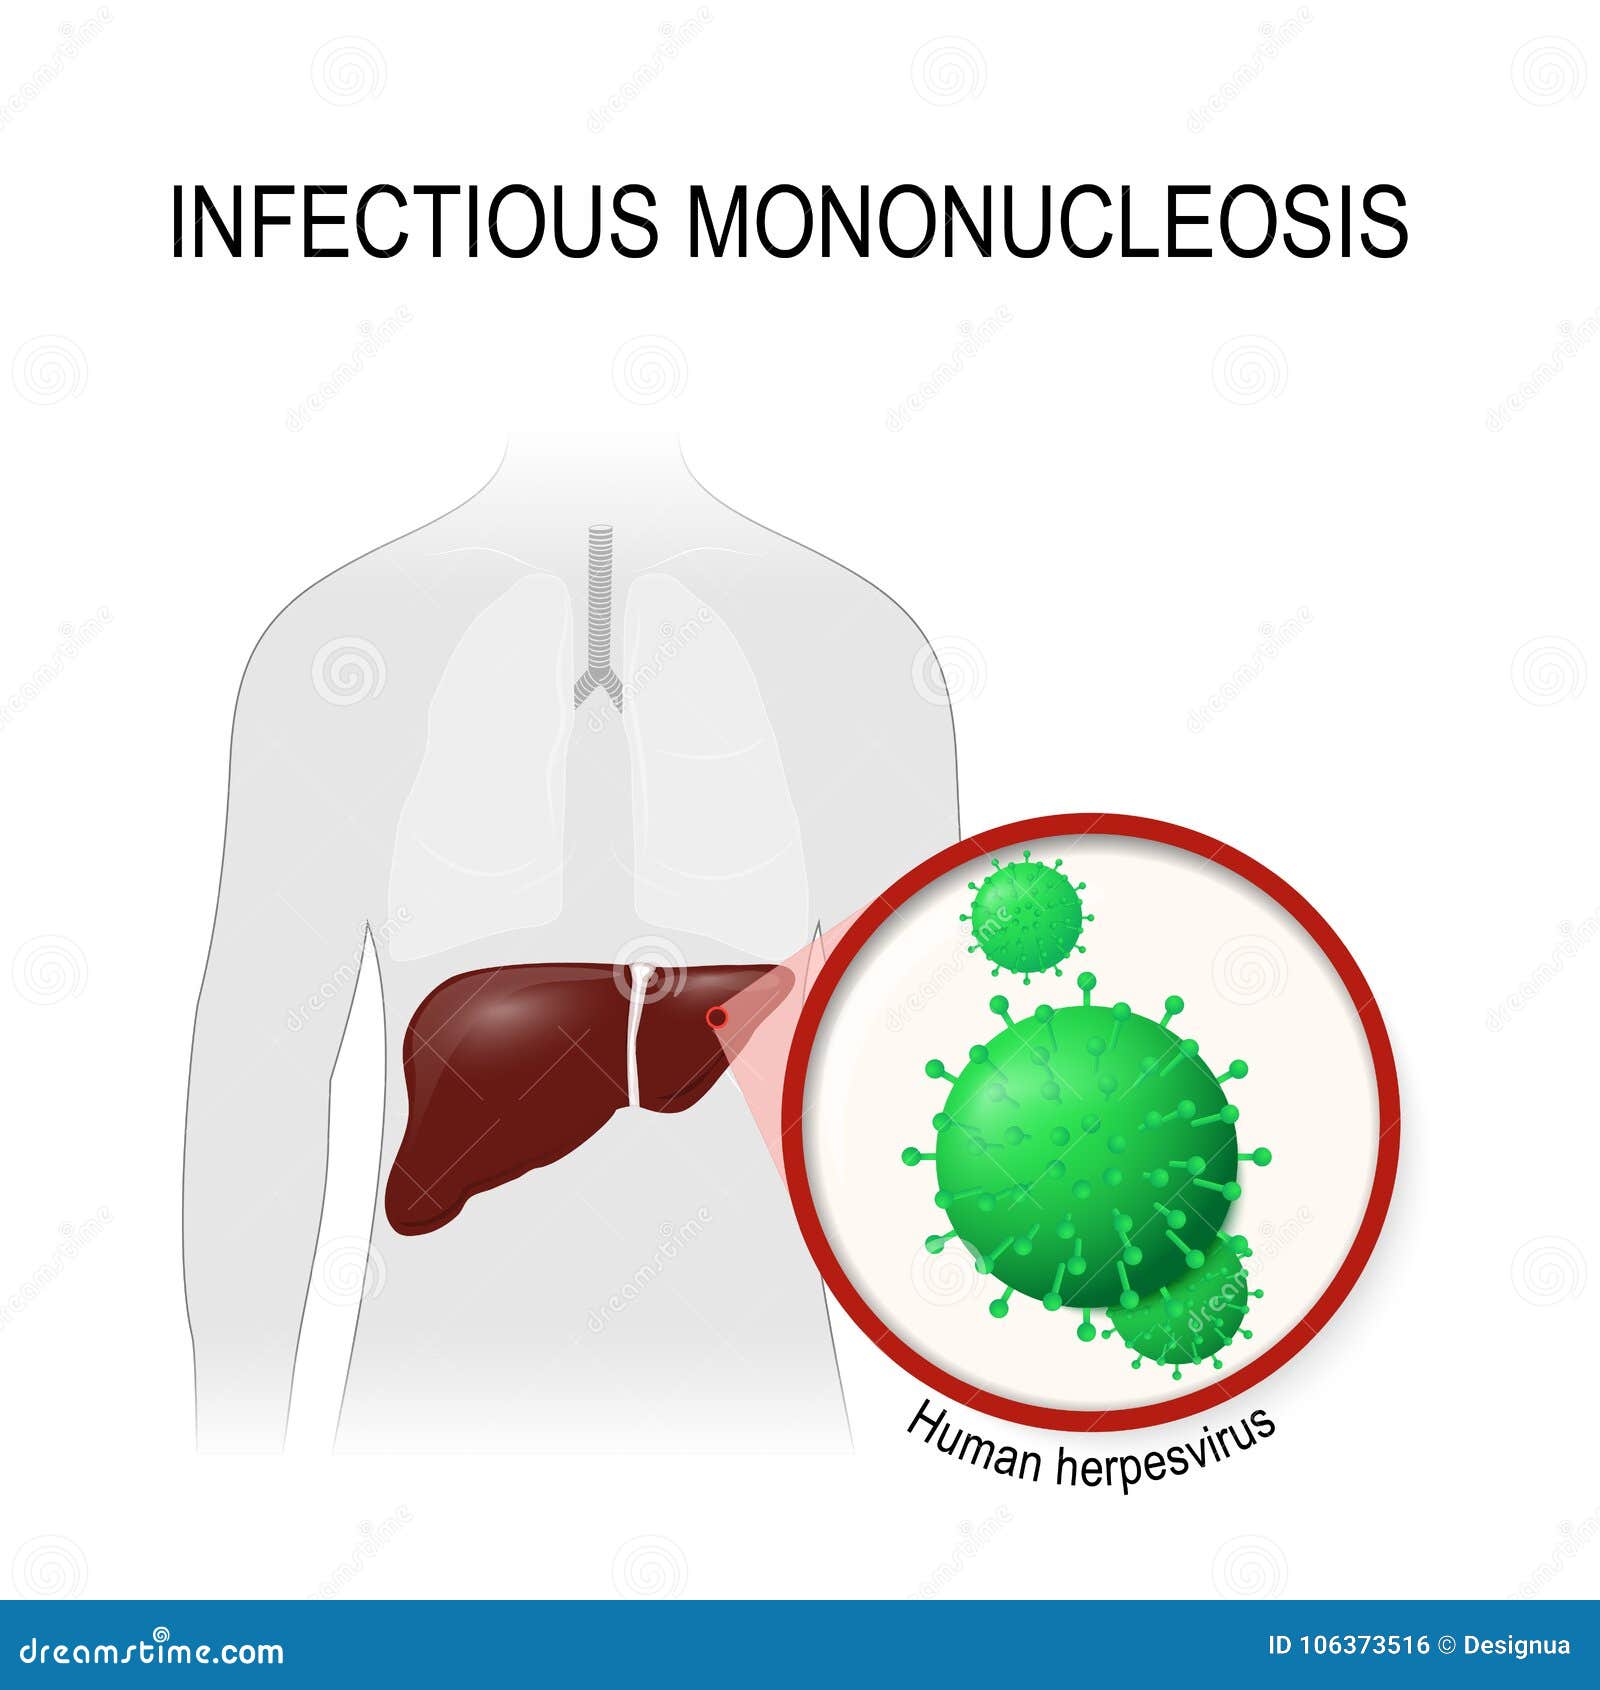 infectious mononucleosis. human herpevirus